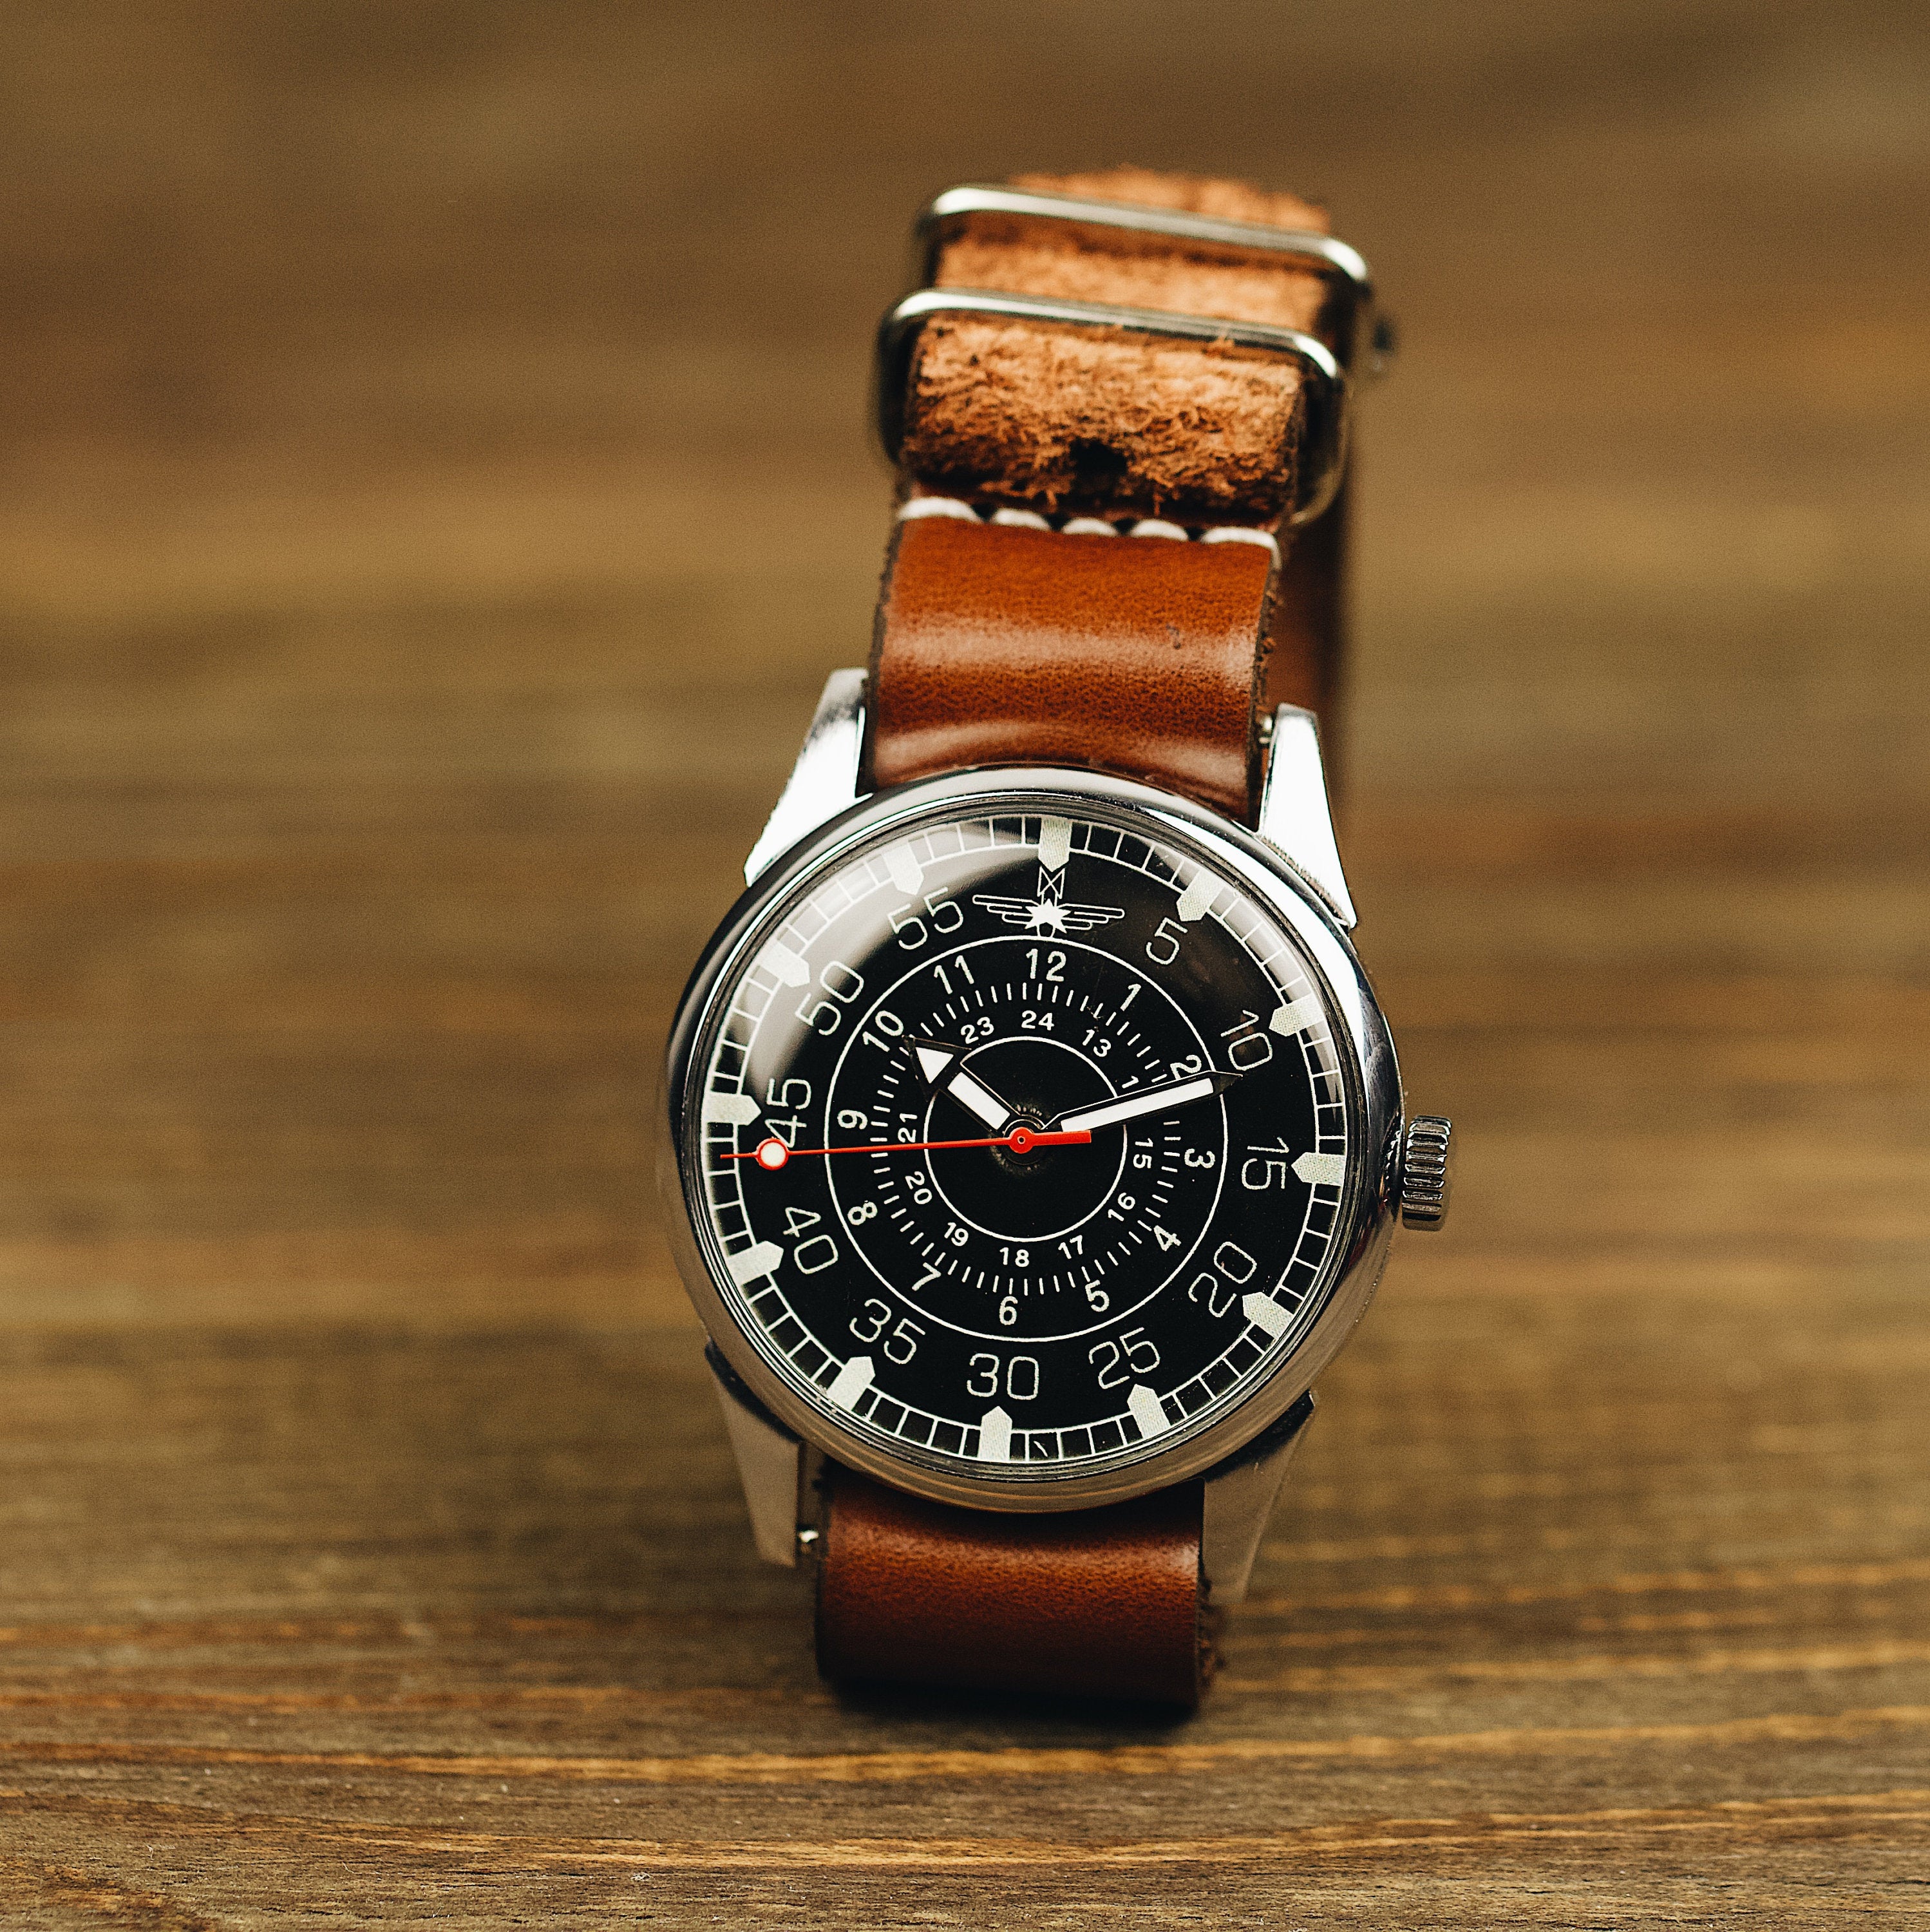 Vintage soviet very rare men's watch Aviator with leather nato strap 